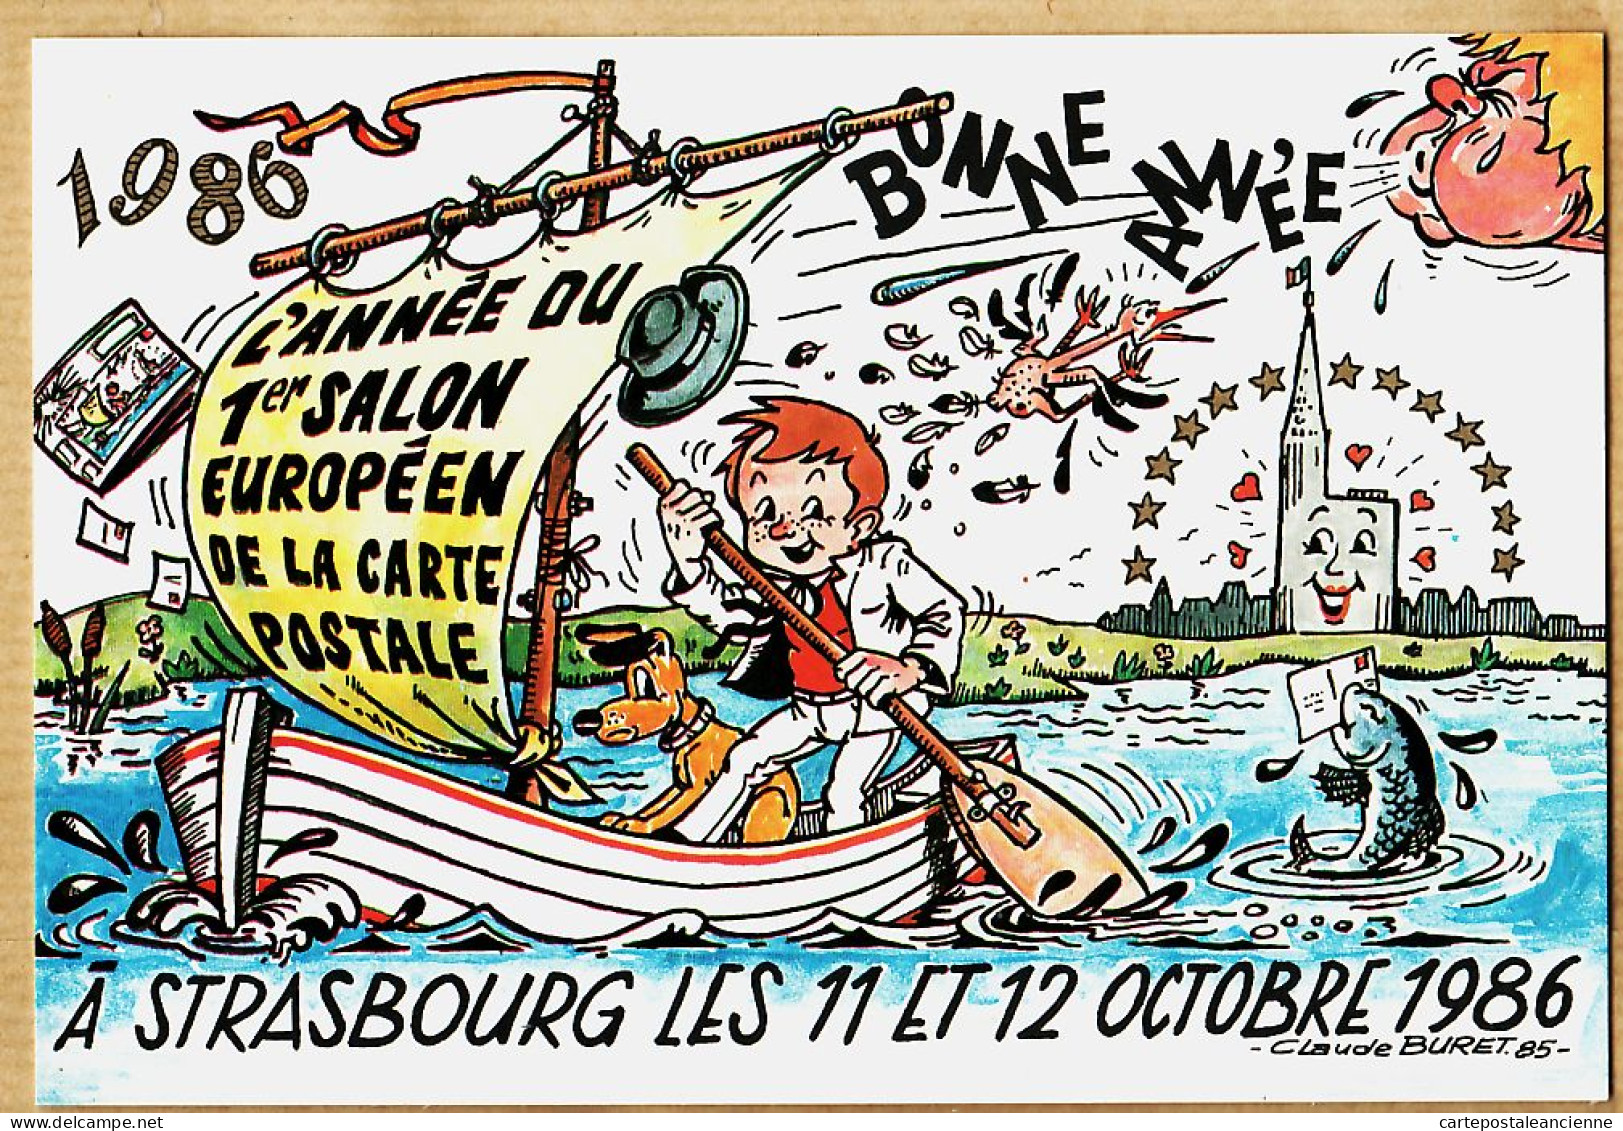 05255 ● ● STRASBOURG Alsace BONNE ANNEE 1986 Carte SPECIMEN Claude BURET 1er SALON EUROPEEN C. POSTALE 11-12 Octobre - Strasbourg